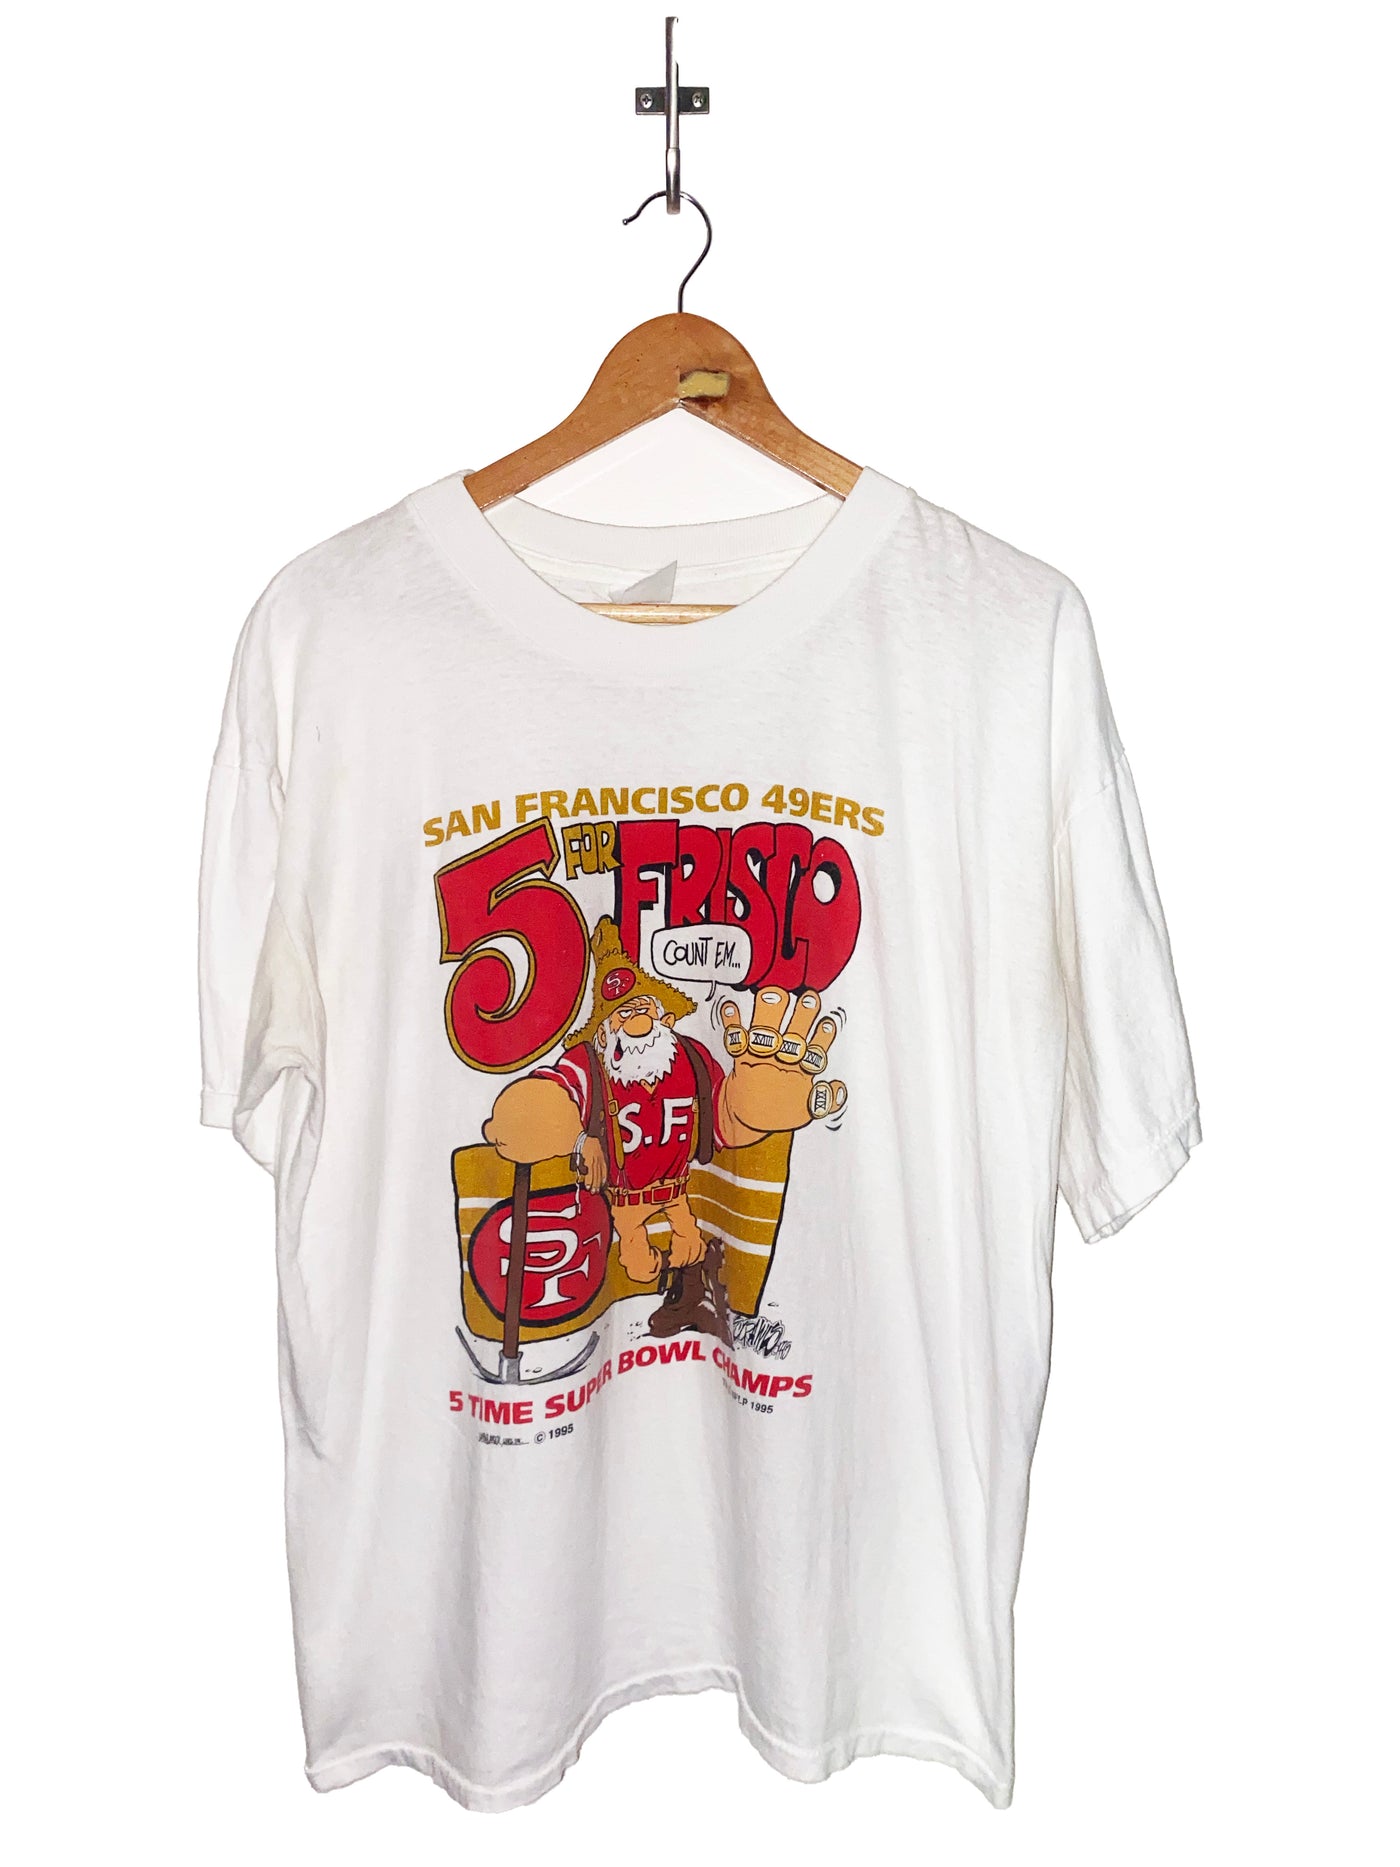 Vintage 1995 5 for Frisco 49ers T-Shirt